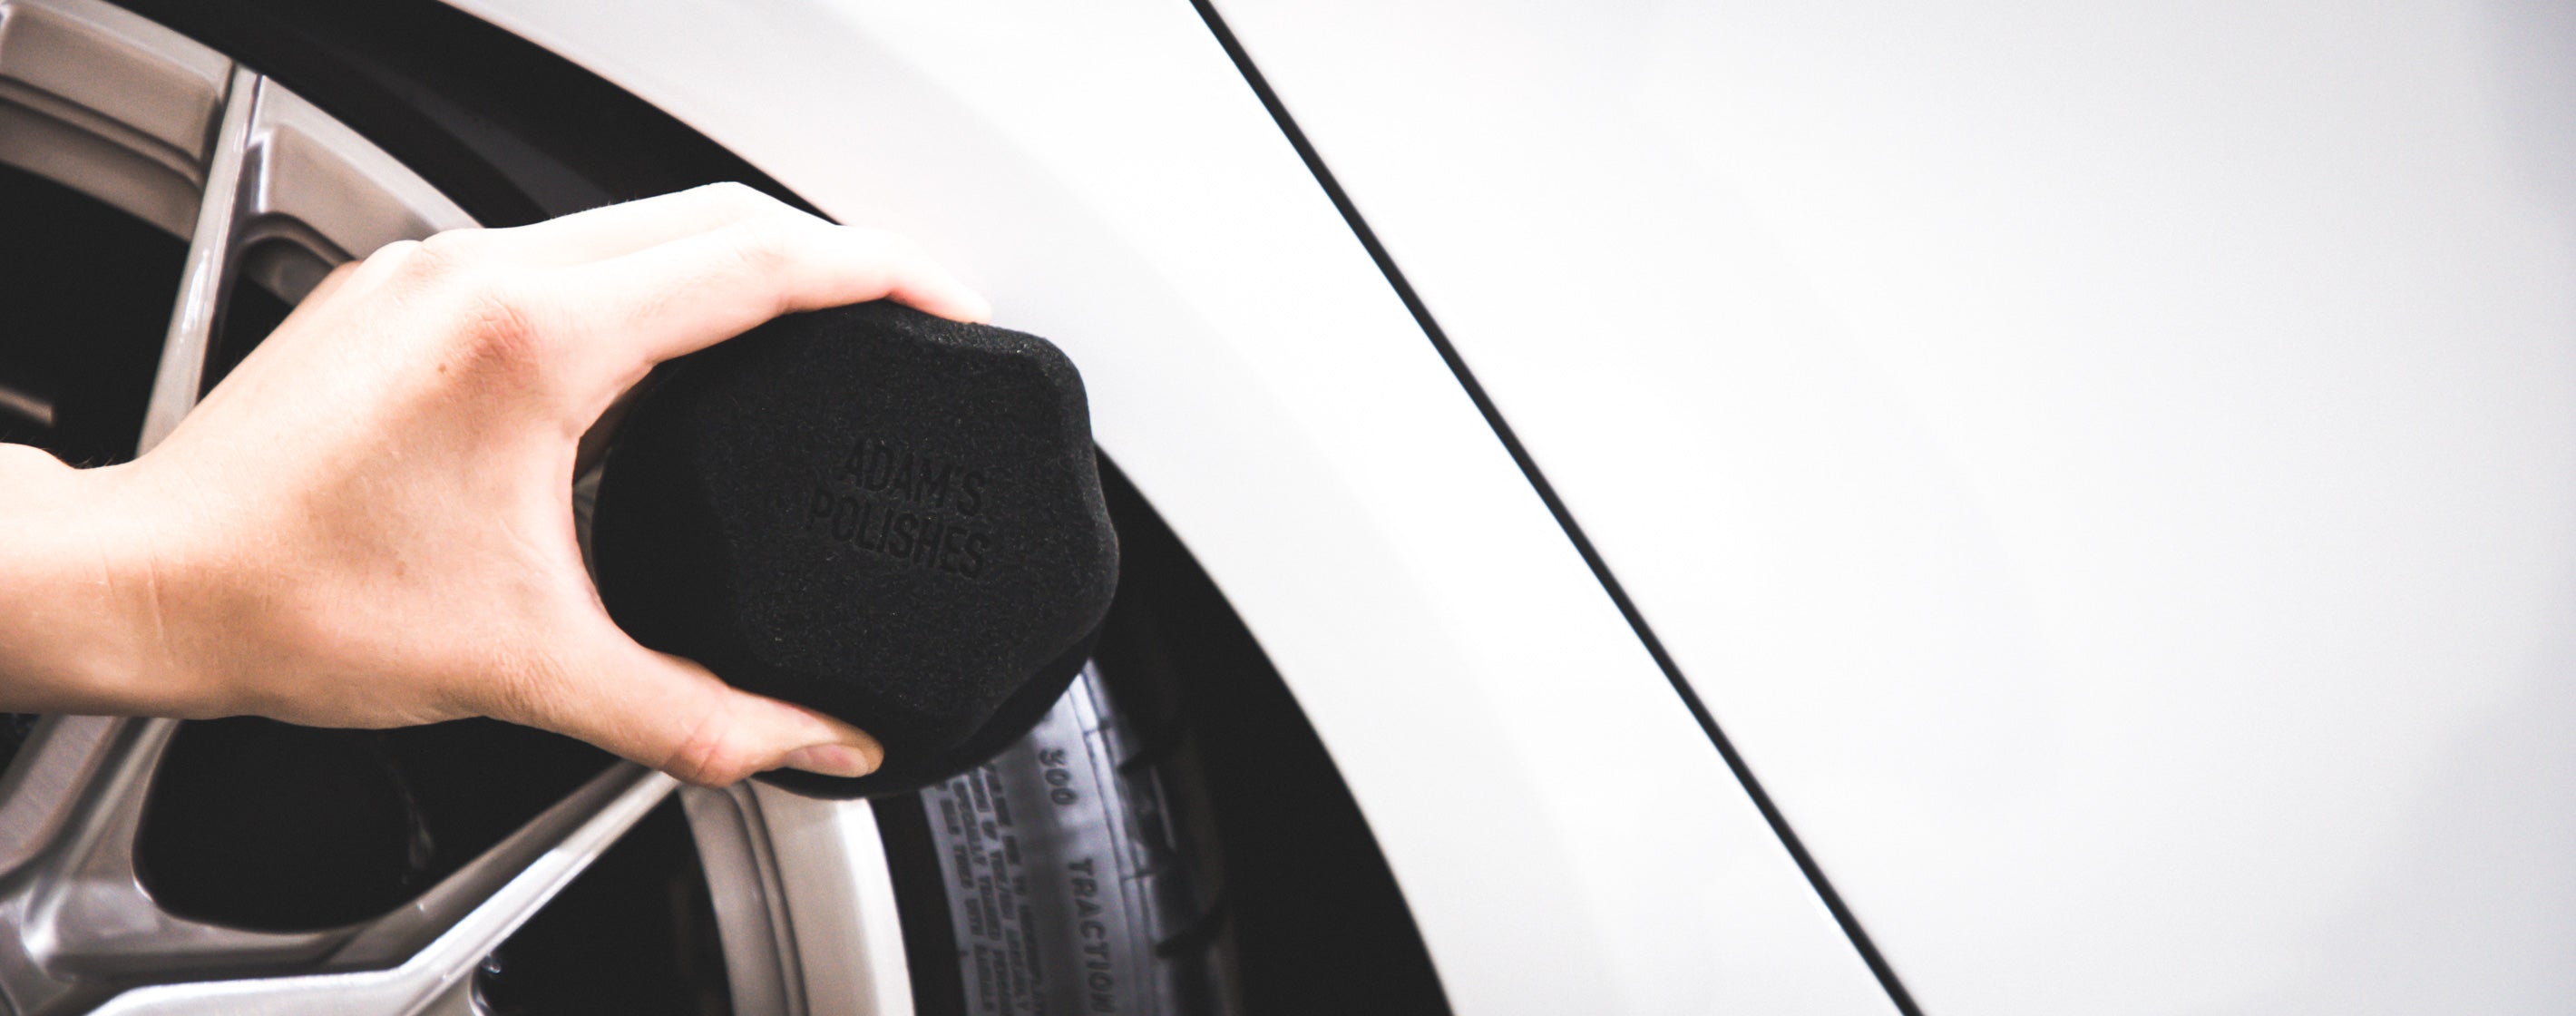 Wabjtam Tire Hex Grip Applicator - Tire Gloss Auto Detailing Foam Sponge  Tool, Post Car Wash Car Cleaning Supplies, For Vinyl Rubber & Trim  Accessor